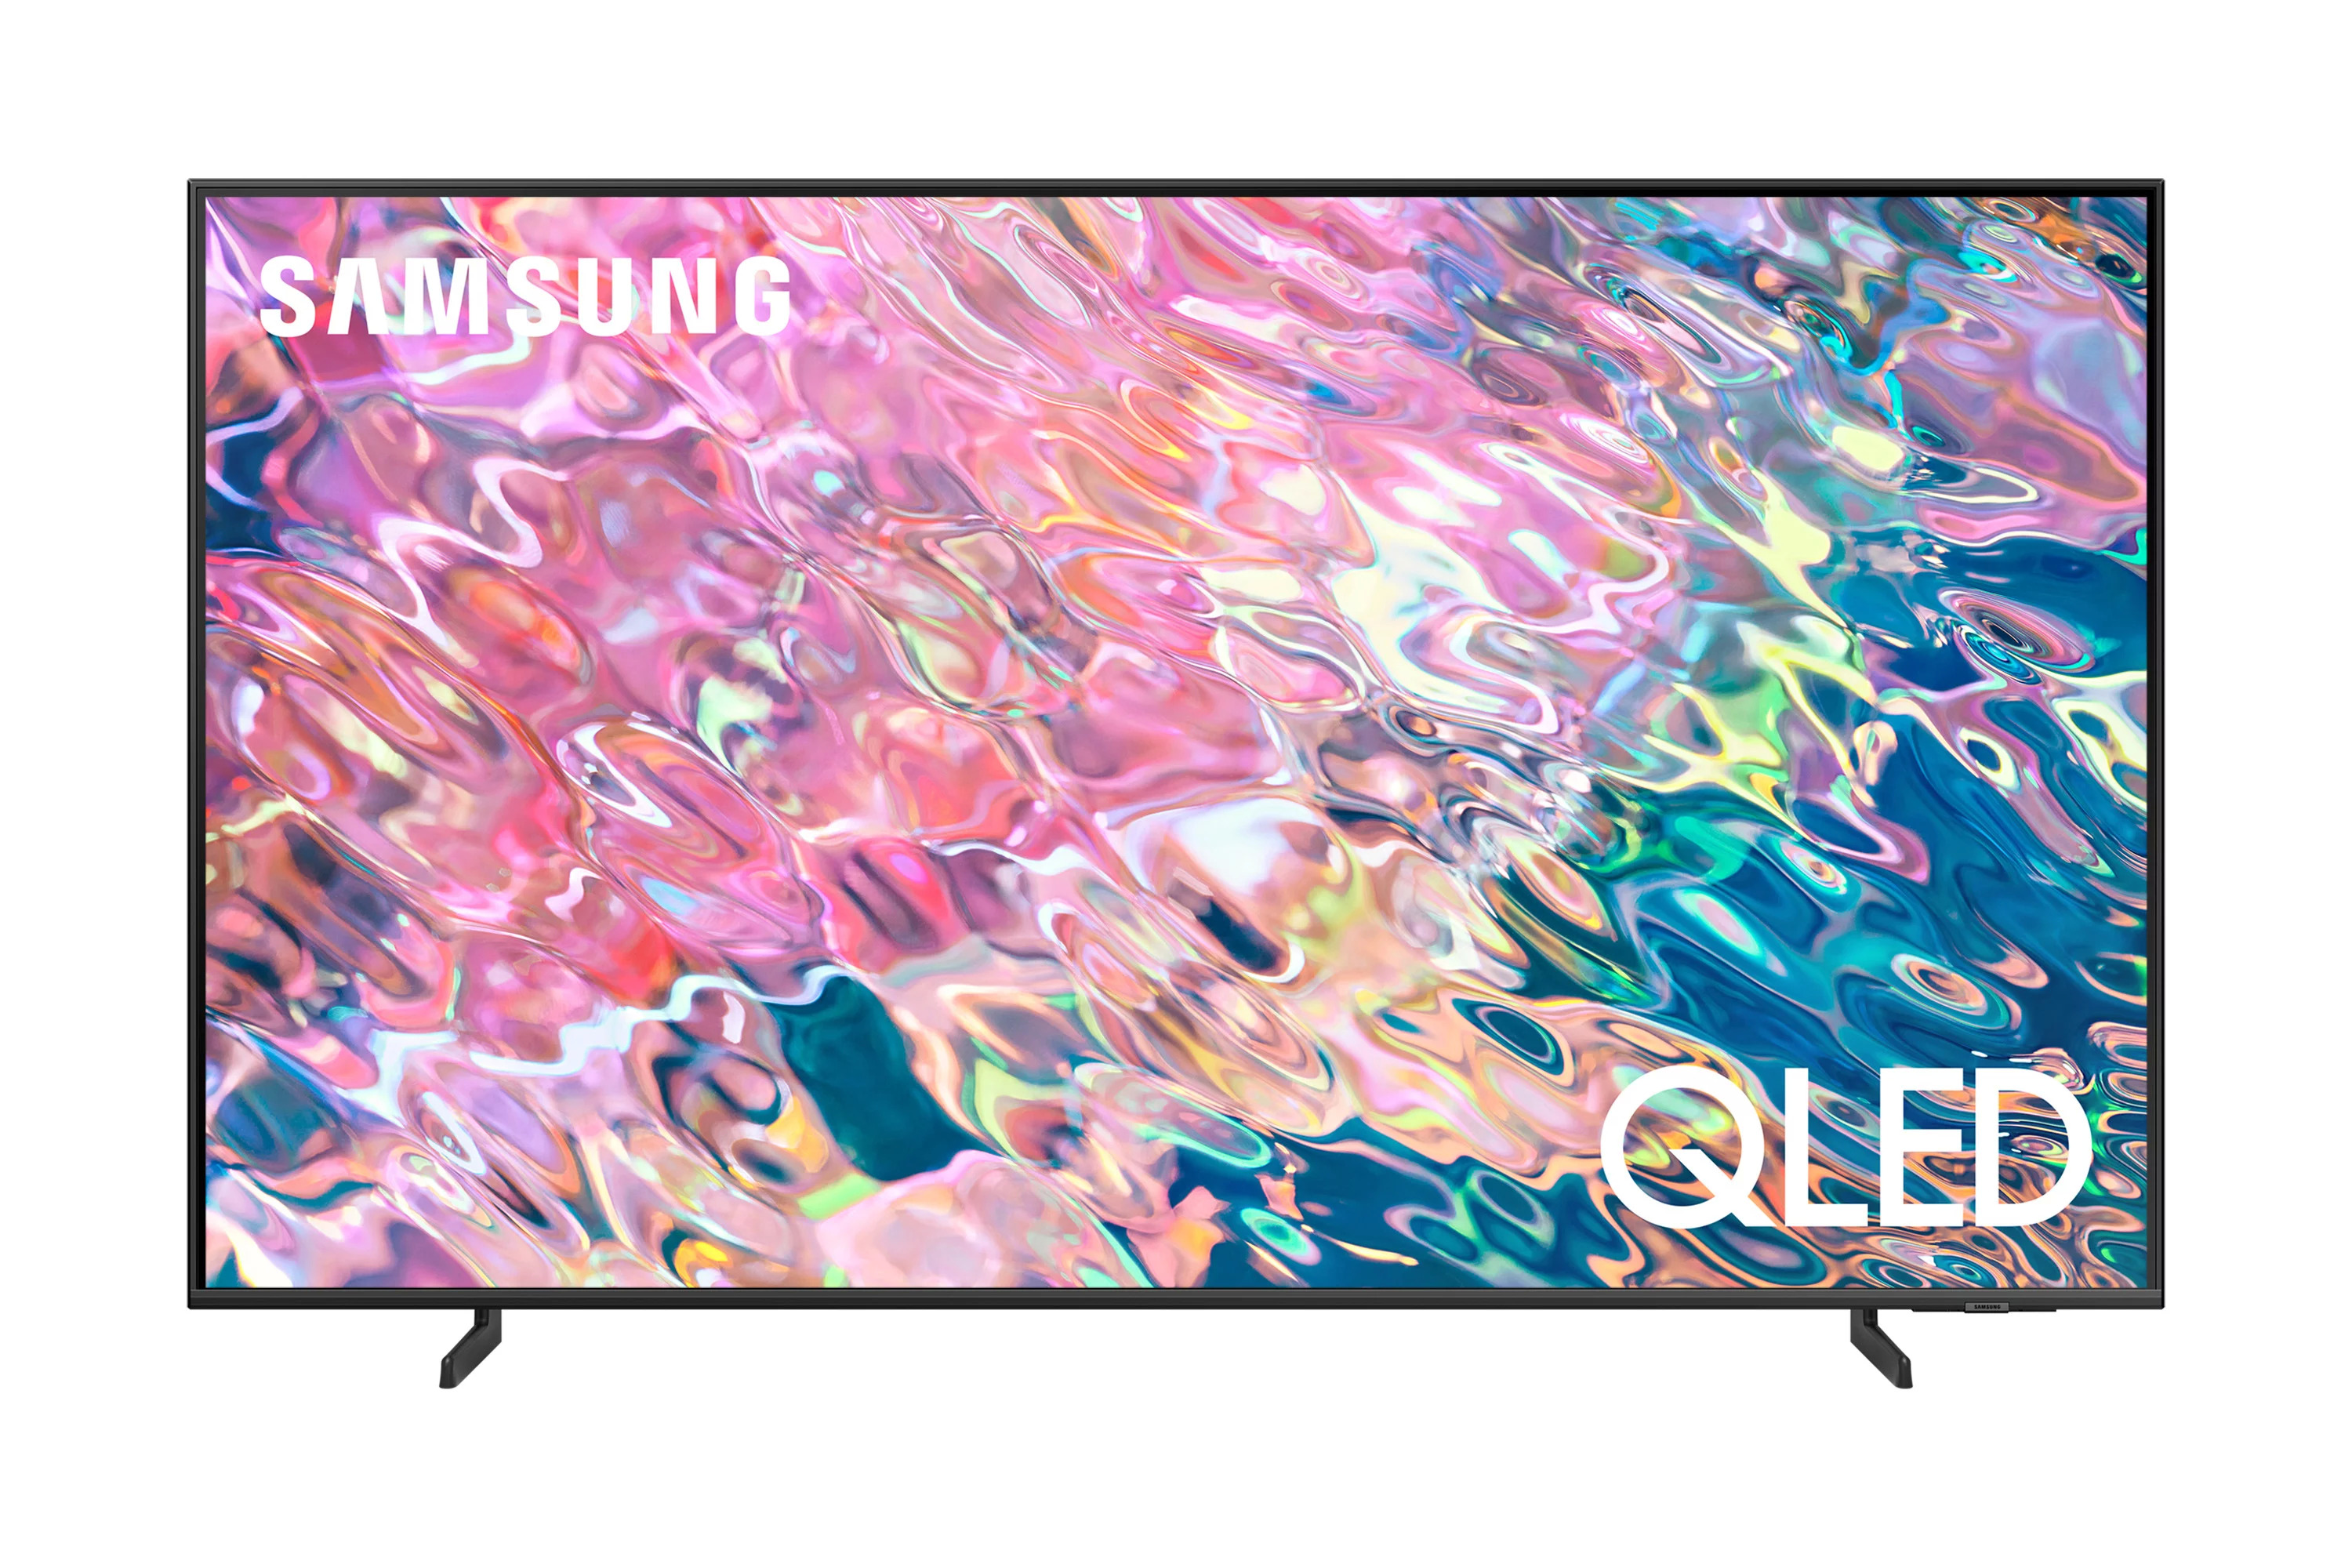 ymmv Walmart in store Samsung Q60B QLED 4K UHD Smart TV QN55Q60BAFXZA - $498 or 398